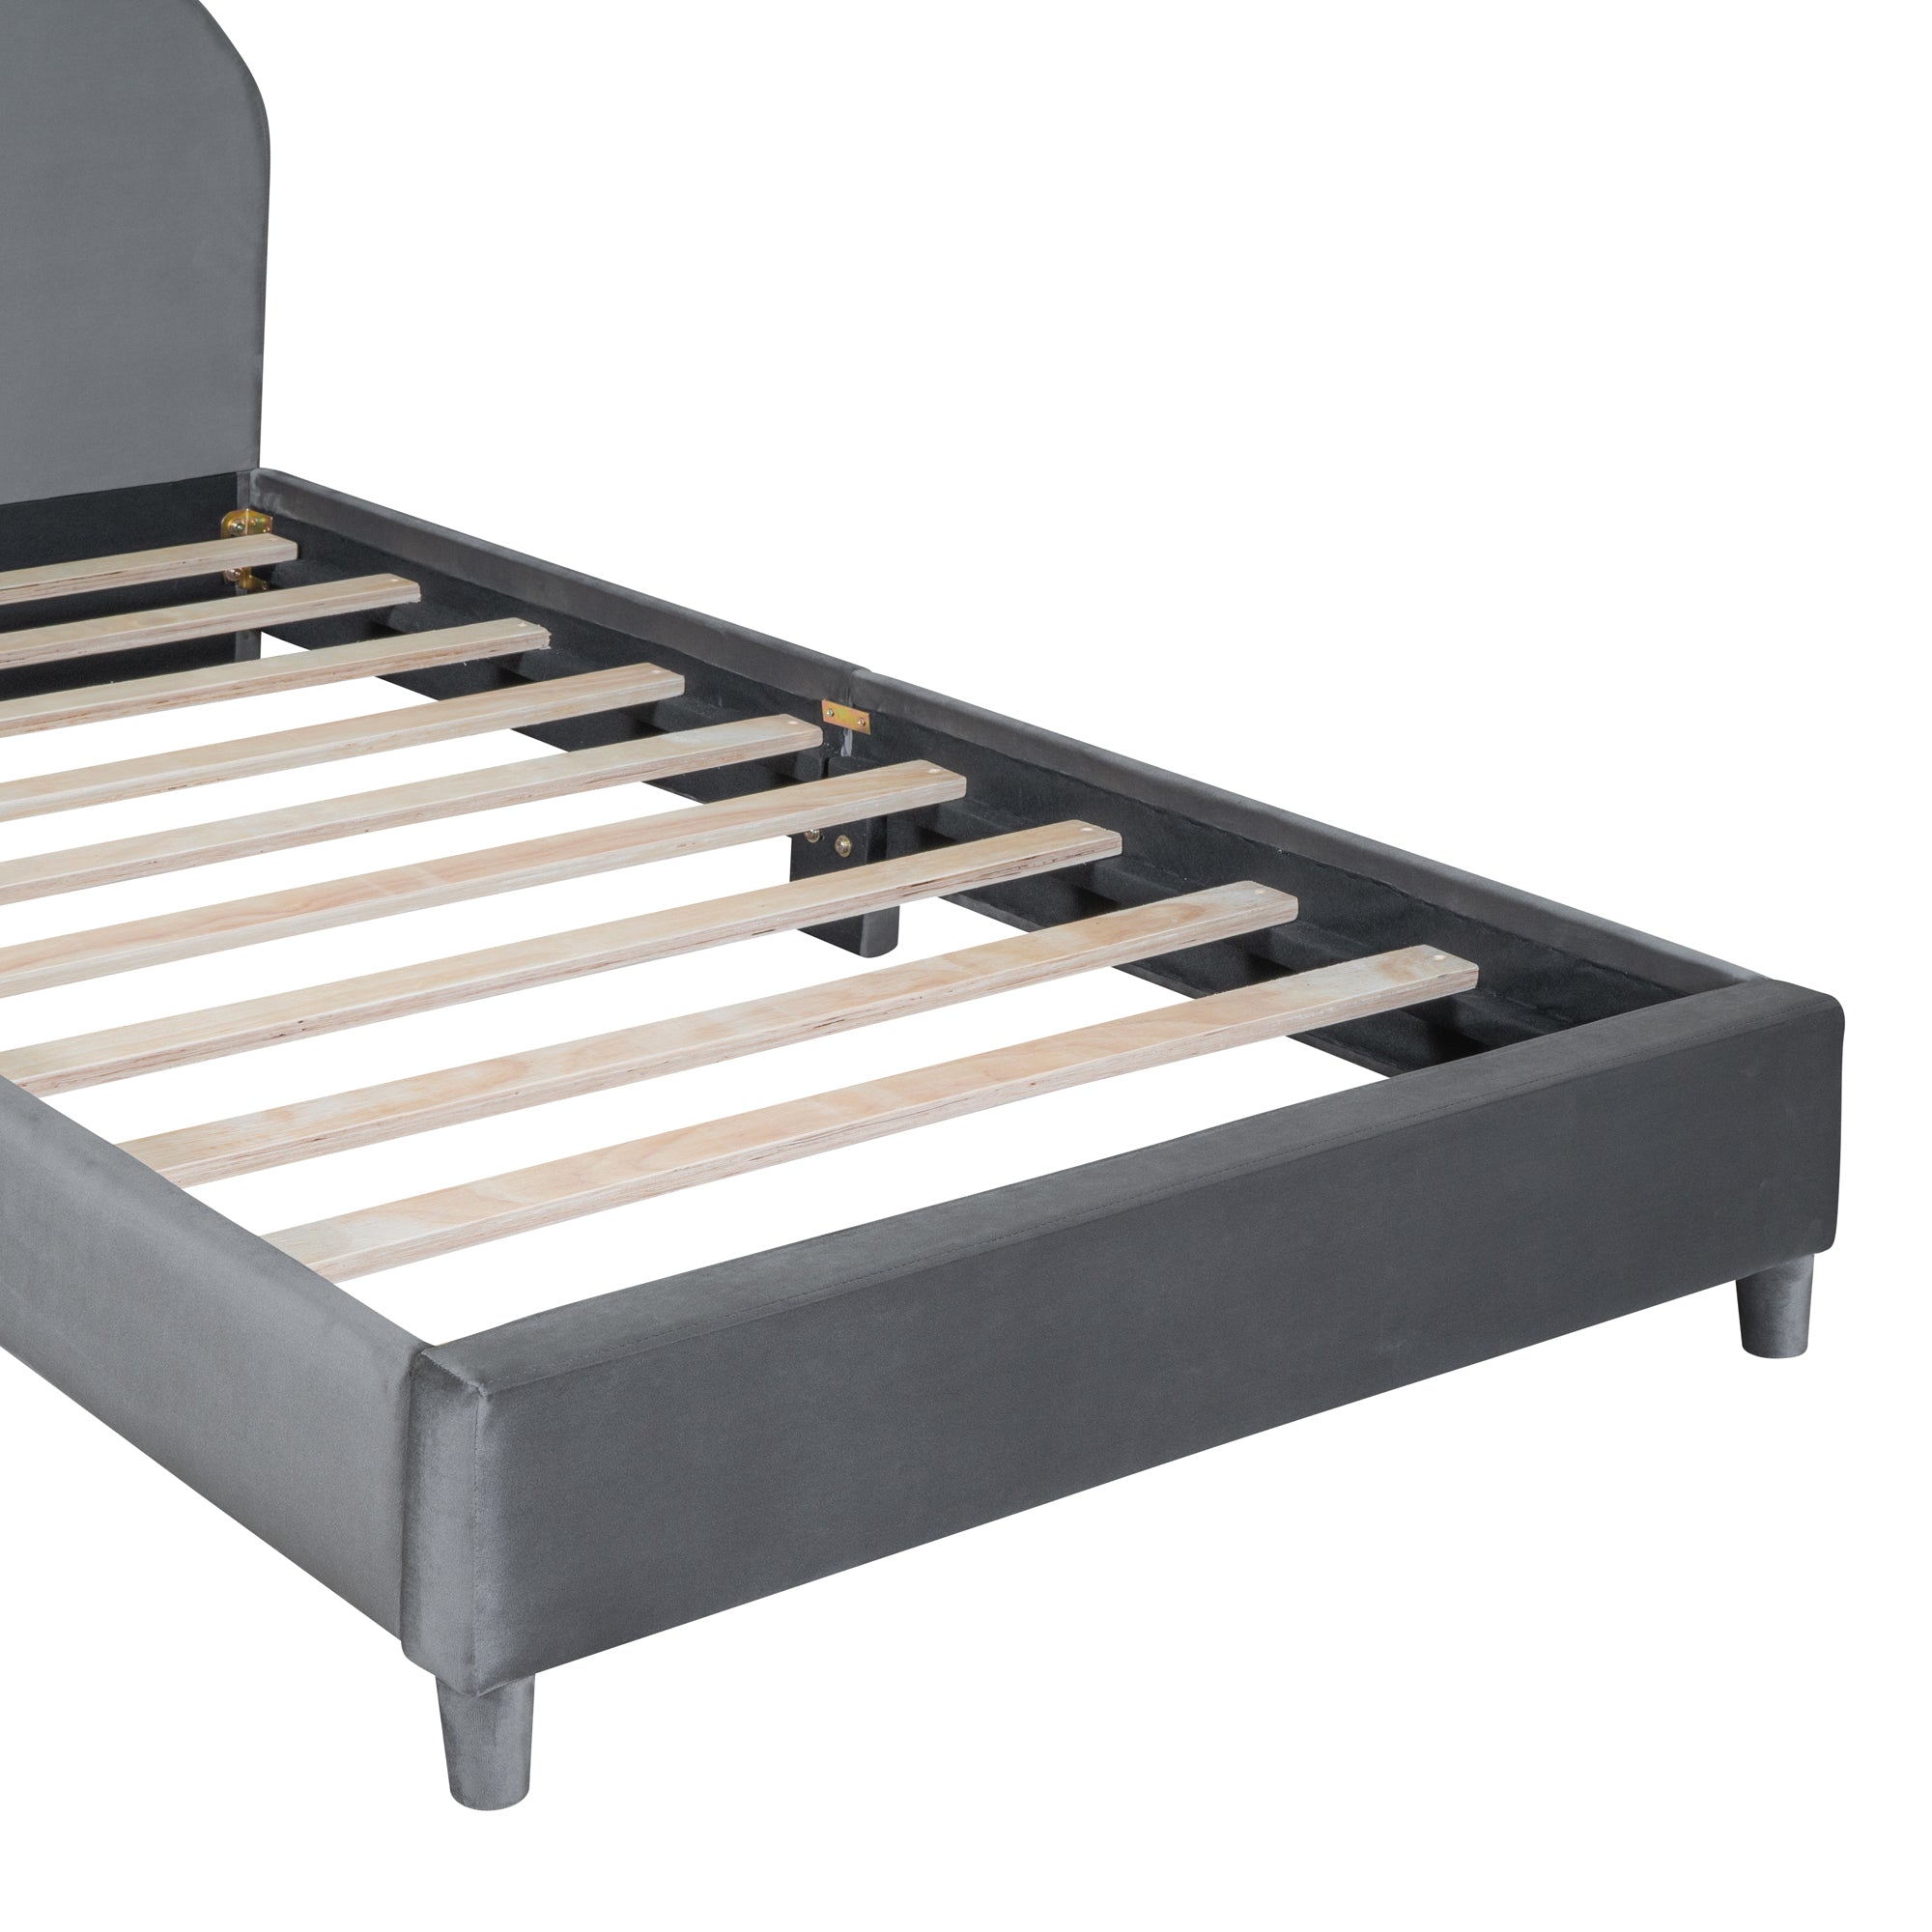 Twin Size Upholstered Platform Bed with Bear Ear gray-velvet